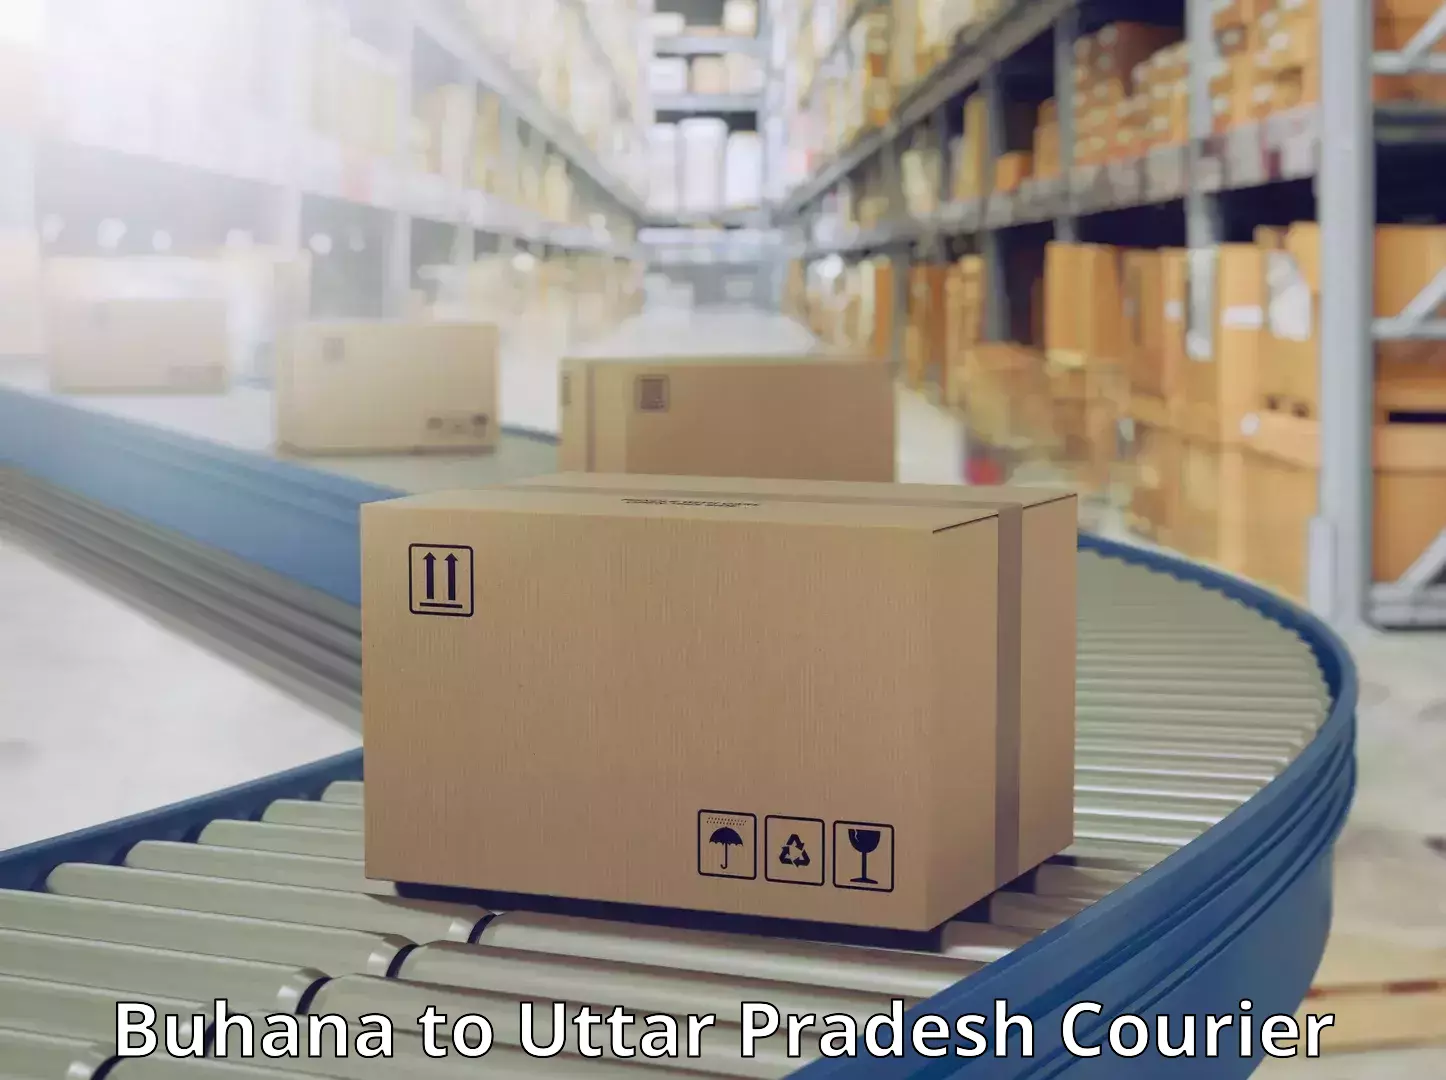 Rapid freight solutions Buhana to Noida